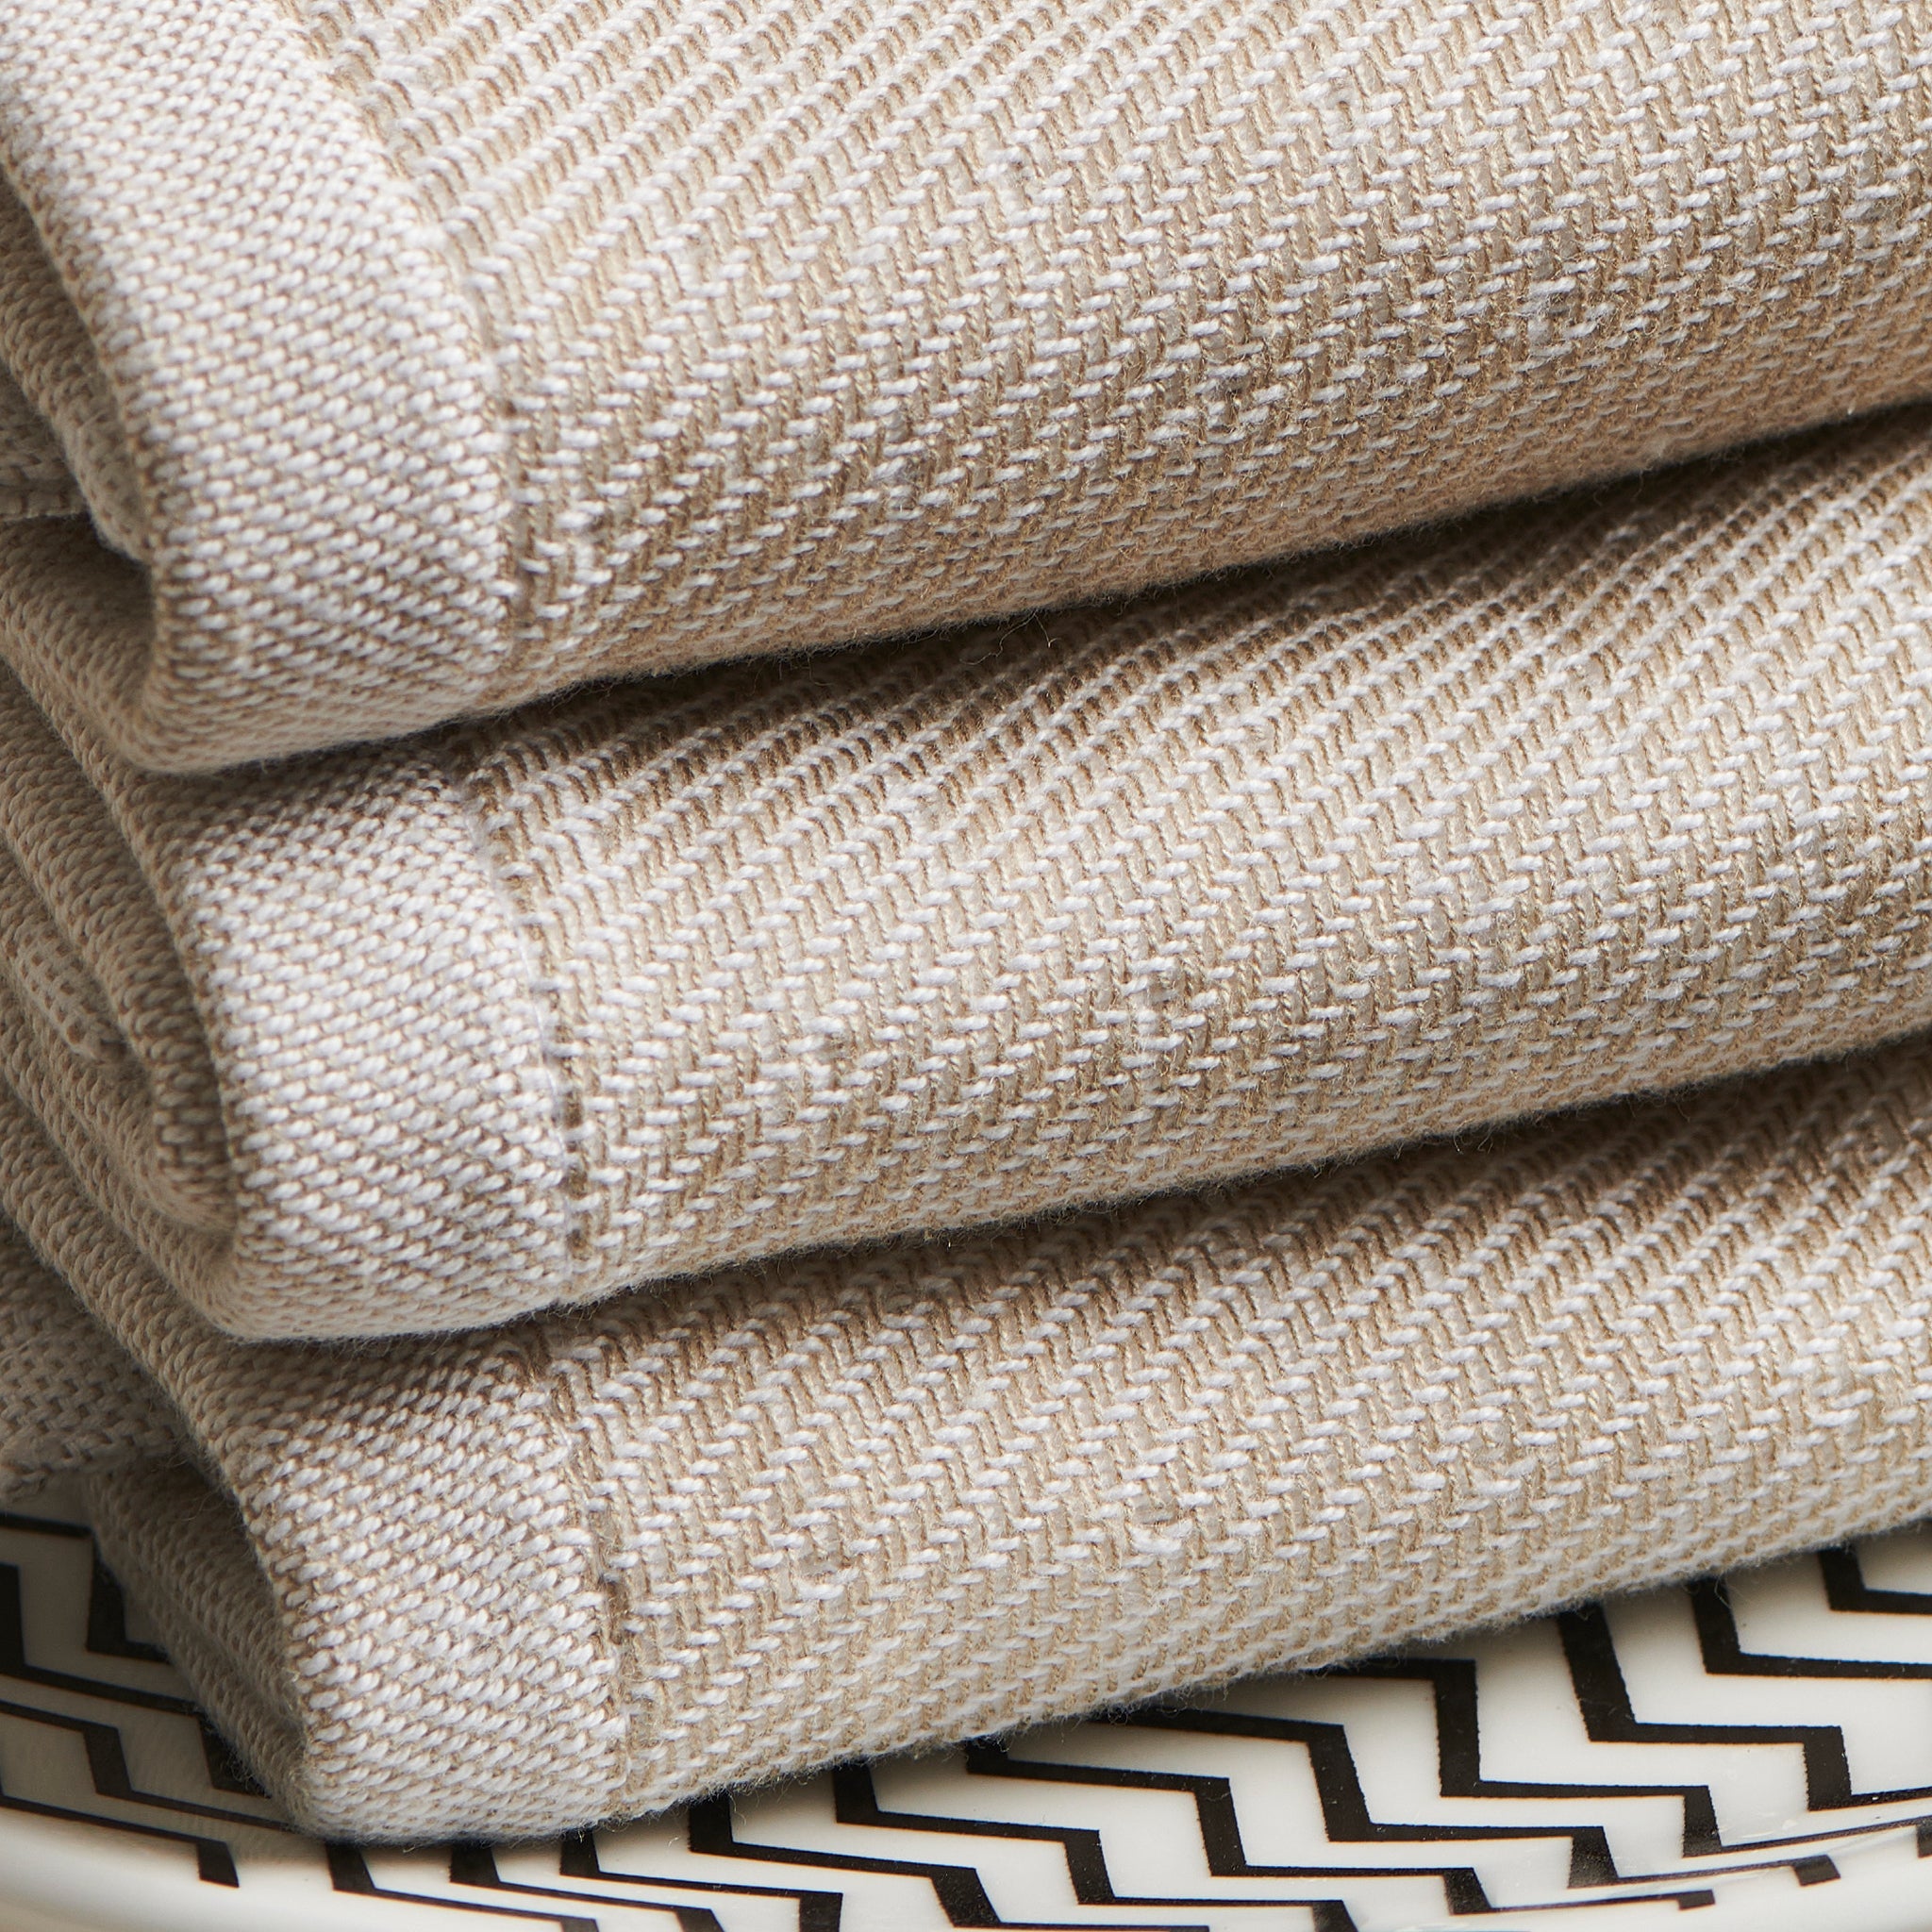 Clay | Cotton Bamboo | Hammam Terry | Face Towel